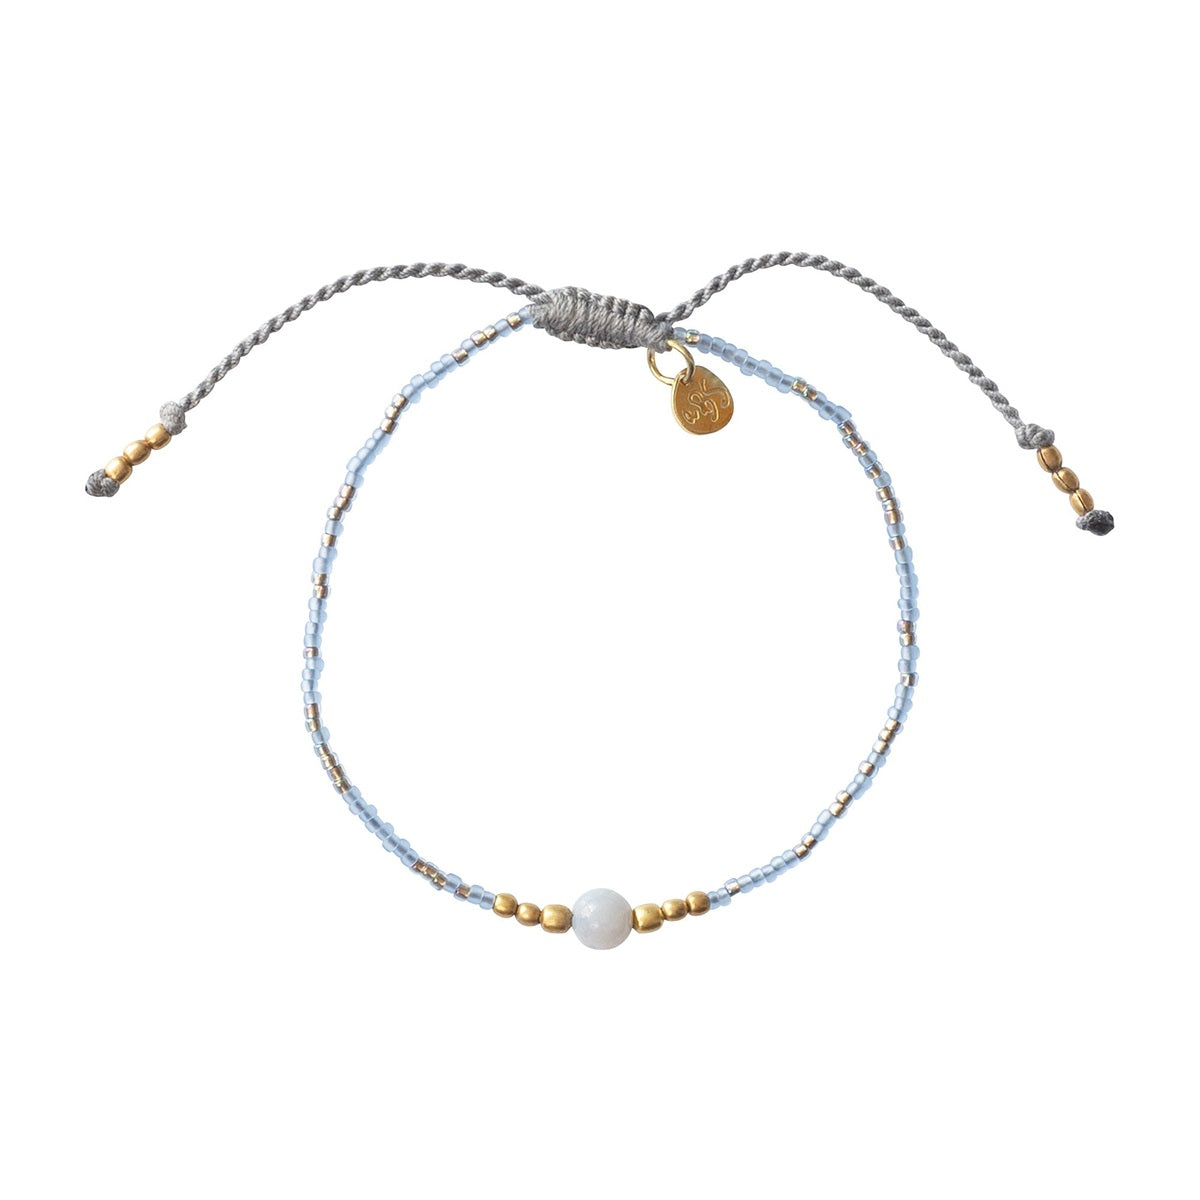 A Beautiful Story, Iris Blue Lace Agate Gold Bracelet